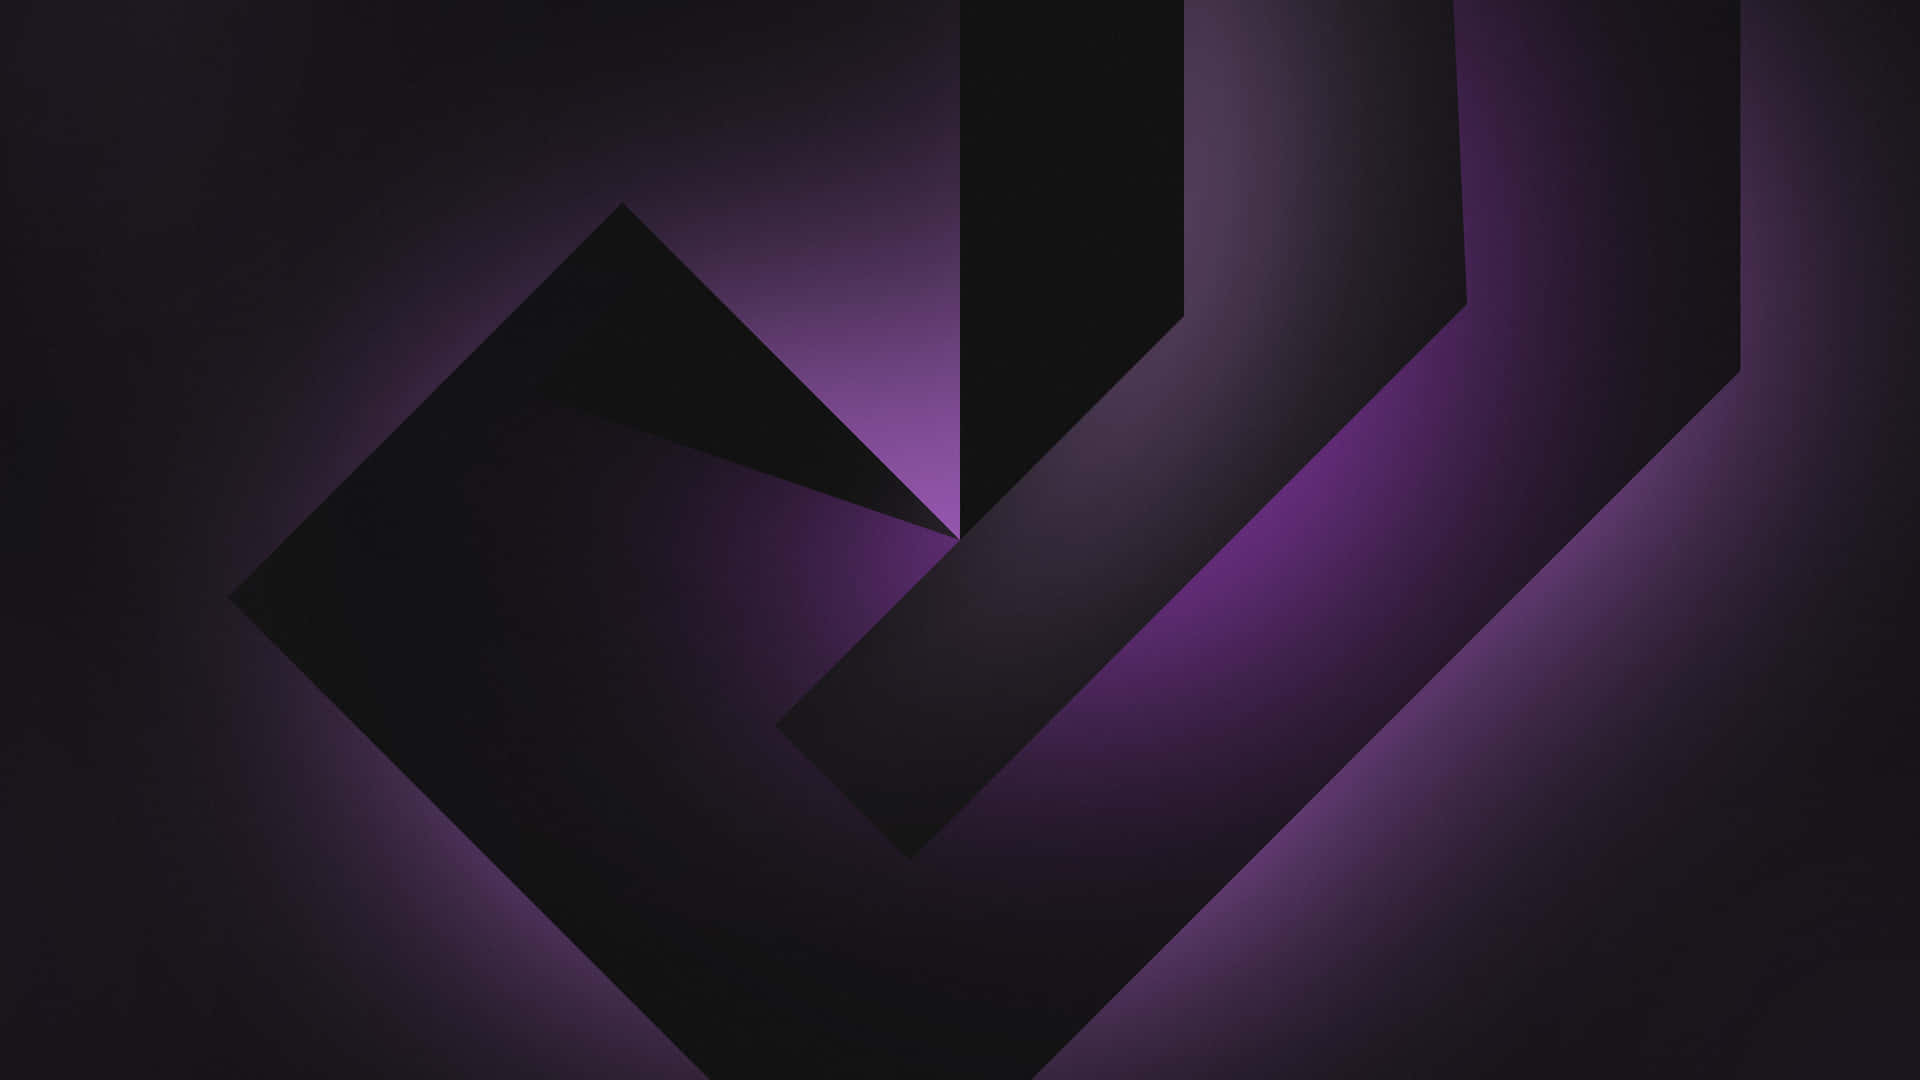 Rich and vibrant dark purple background